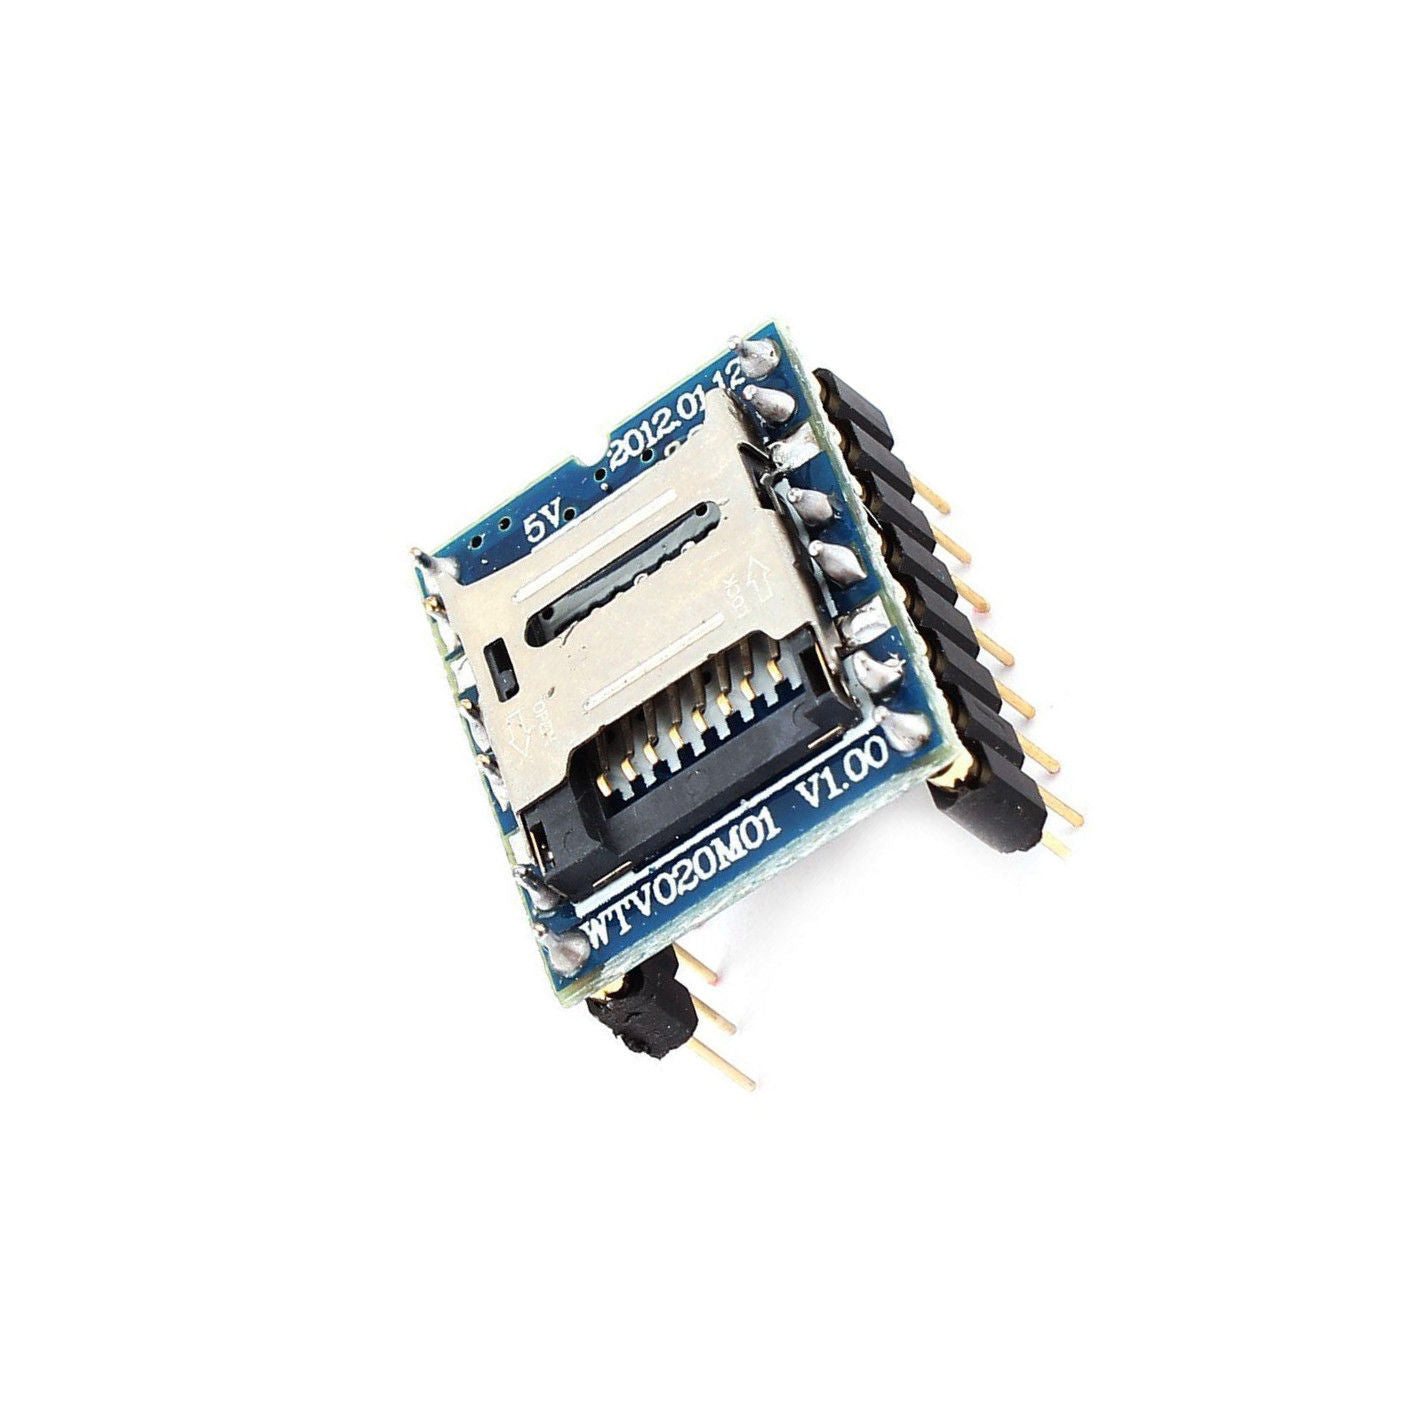 U-disk audio player TF SD card voice module MP3 Sound WTV020-SD-16P for Arduino